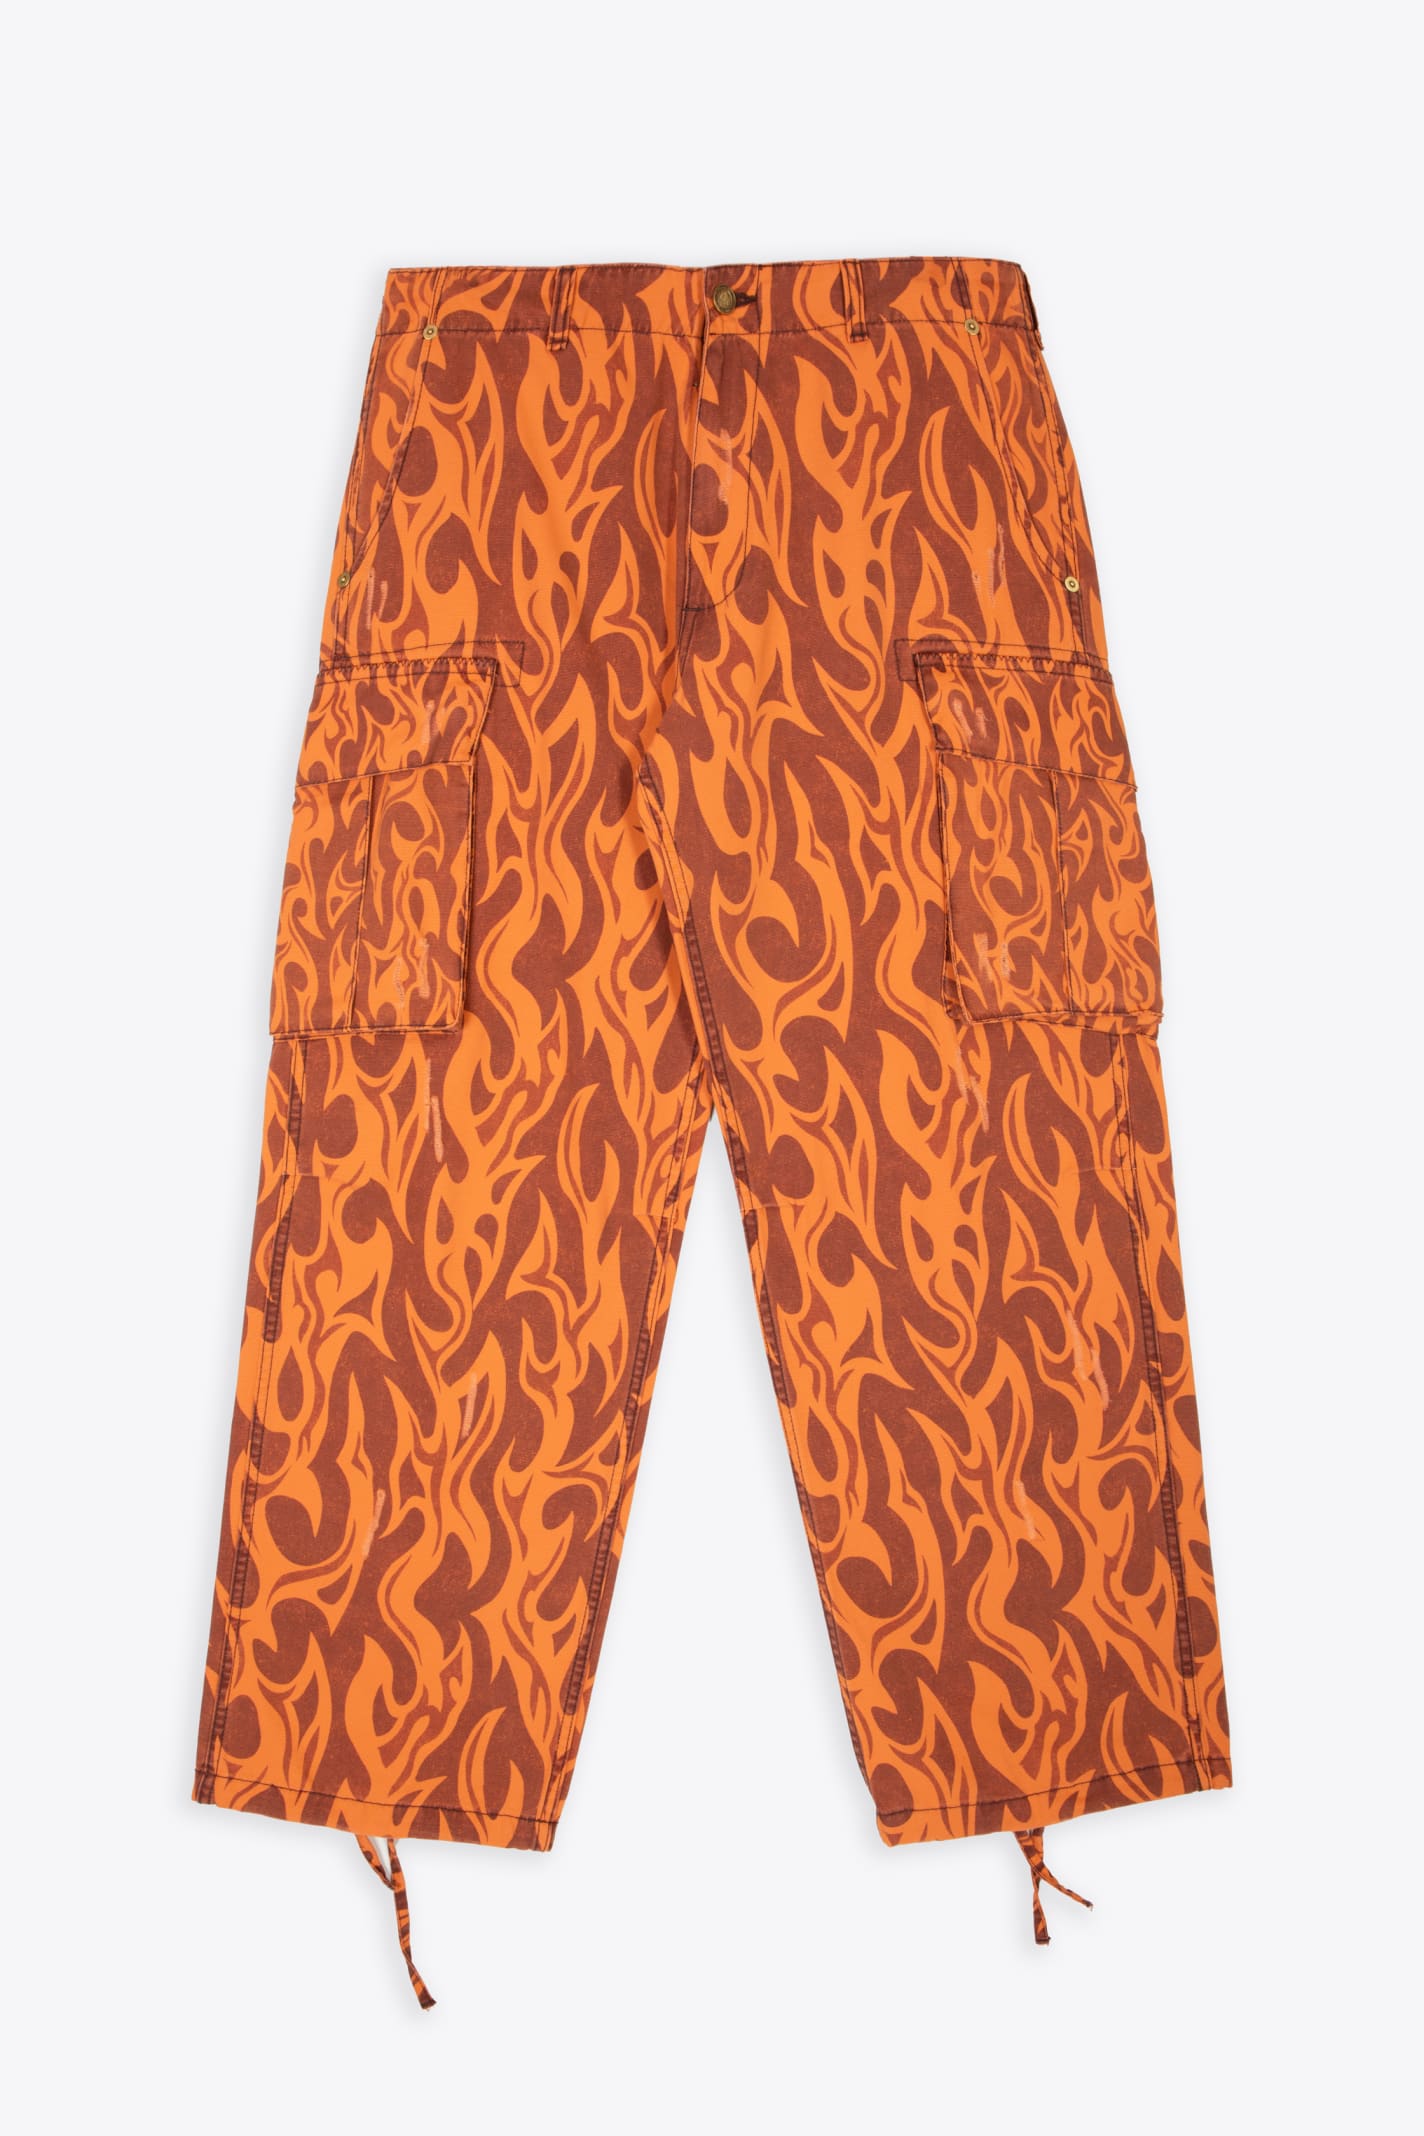 Unisex Printed Cargo Pants Woven Orange Canvas Printed Cargo Pant - Unisex Printed Cargo Pants Woven